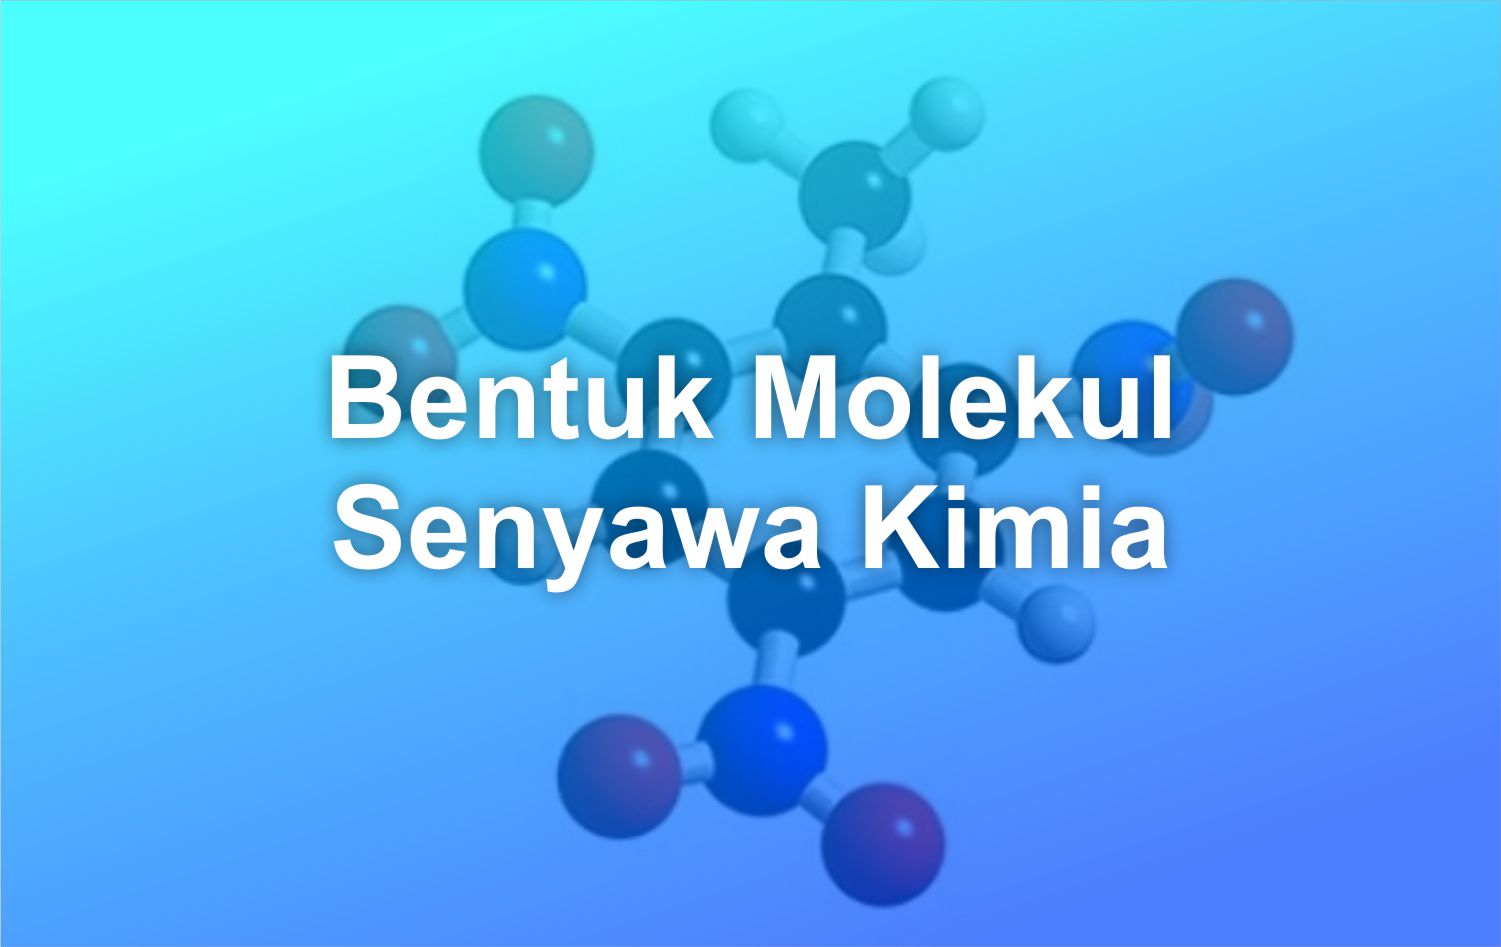 Bentuk Molekul Senyawa Kimia